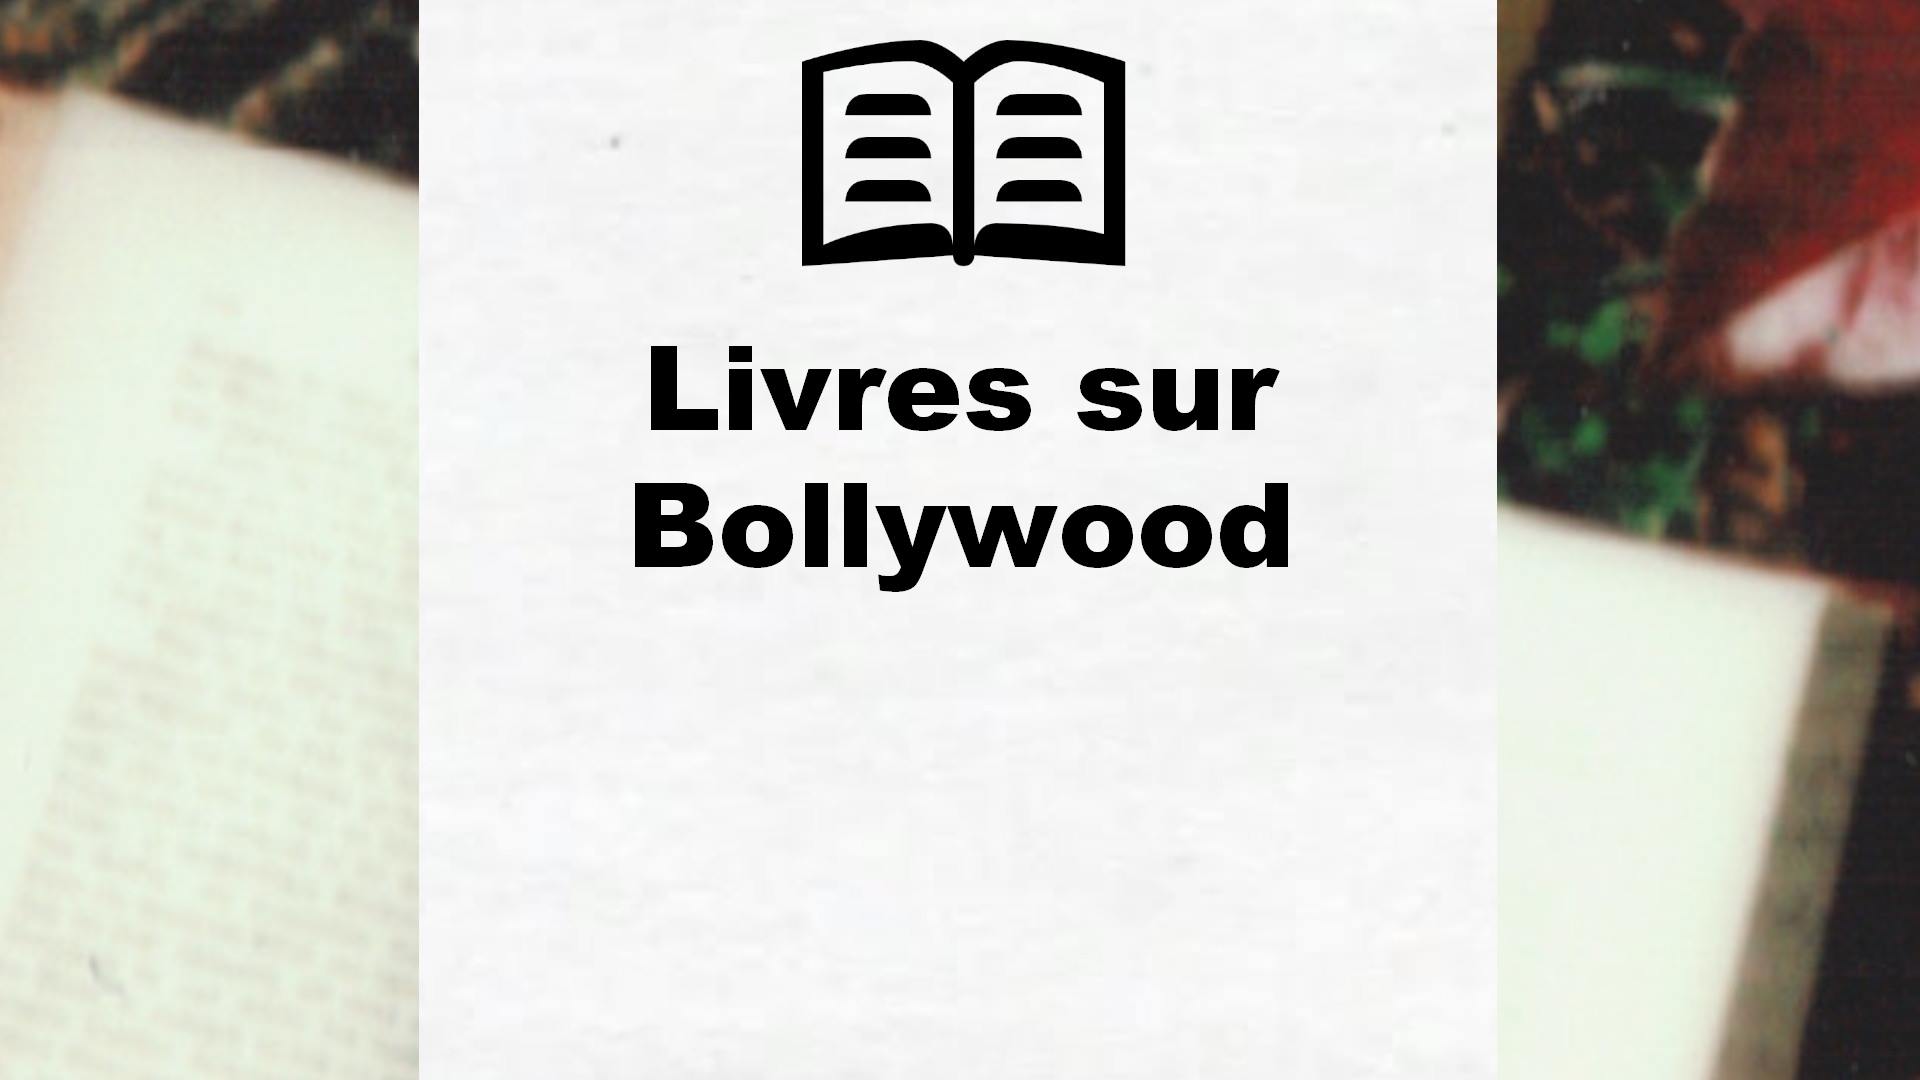 Livres sur Bollywood